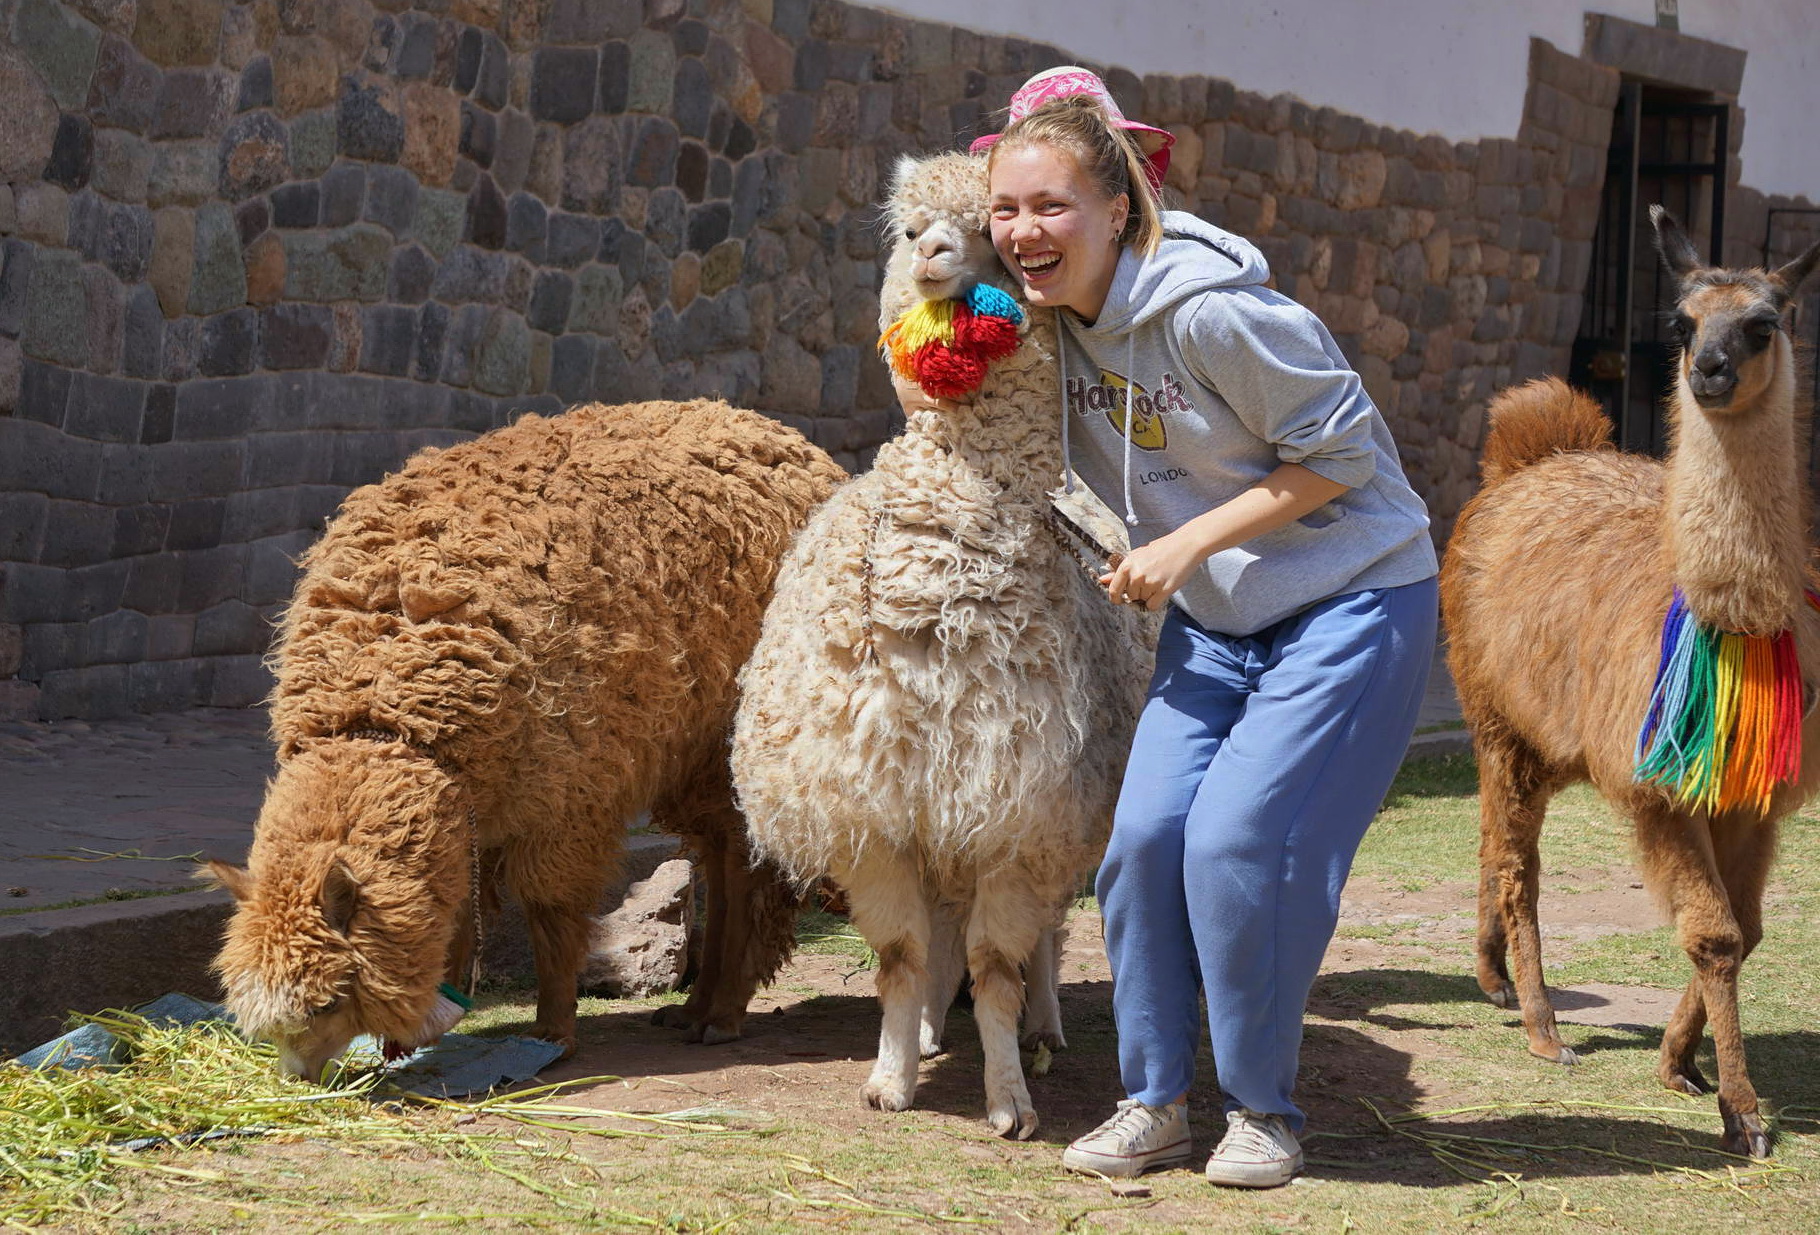 Valeriia Kuznetsova poses with lamas in the center of Cusco, Peru on July 21. (Courtesy)